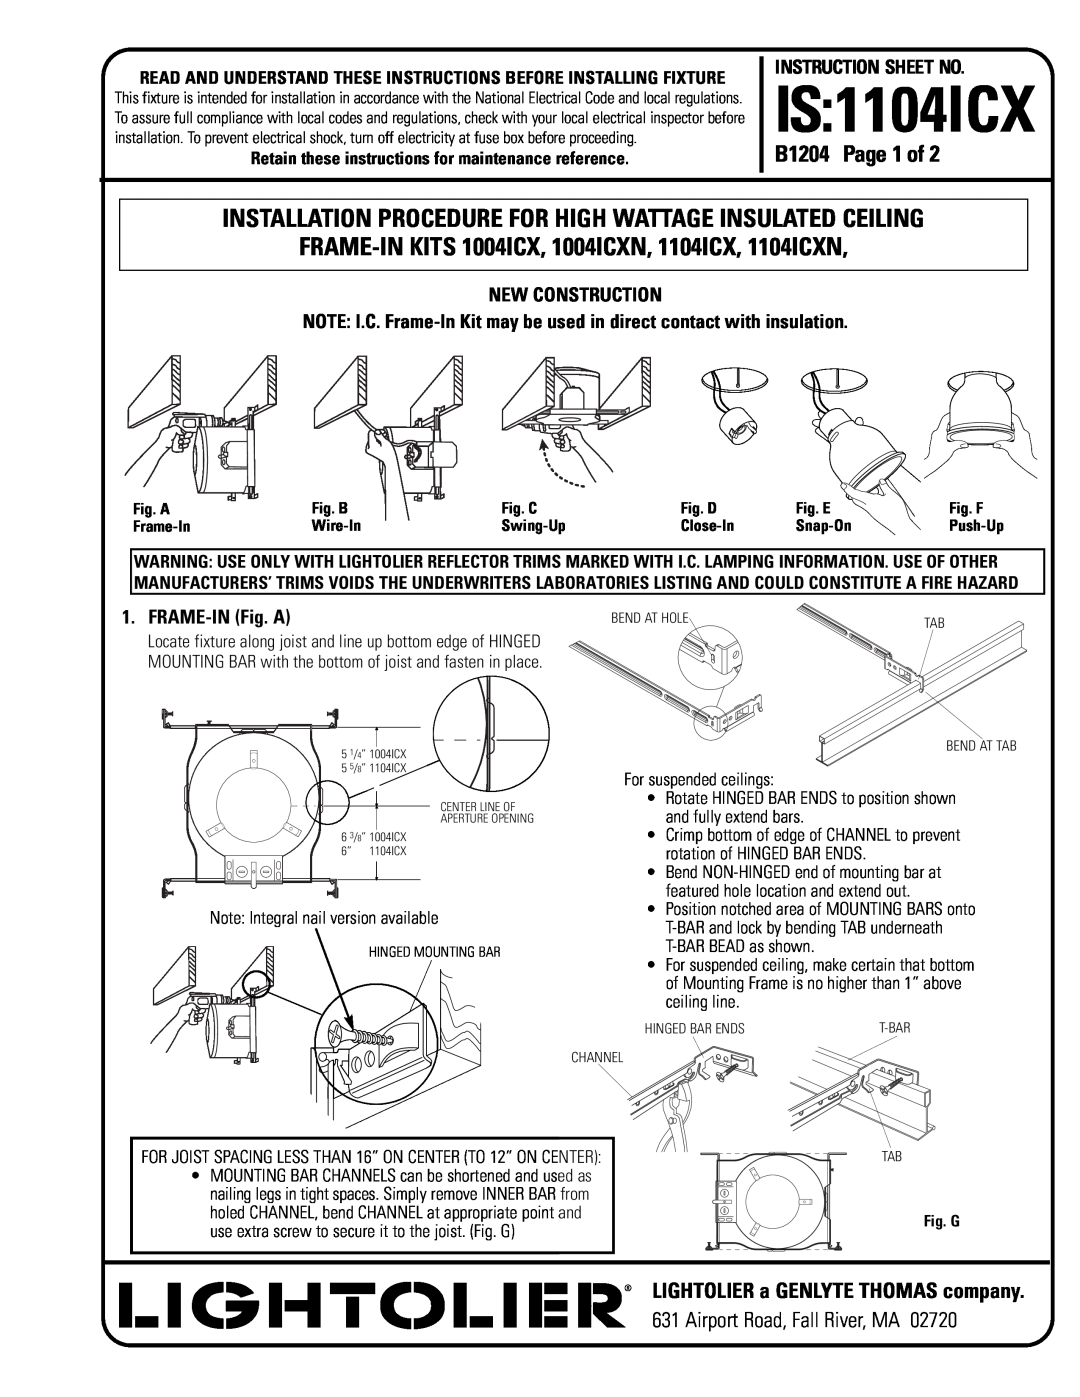 Lightolier 1104ICXN instruction sheet B1204, Instruction Sheet No, New Construction, FRAME-INFig. A, IS 1104ICX 